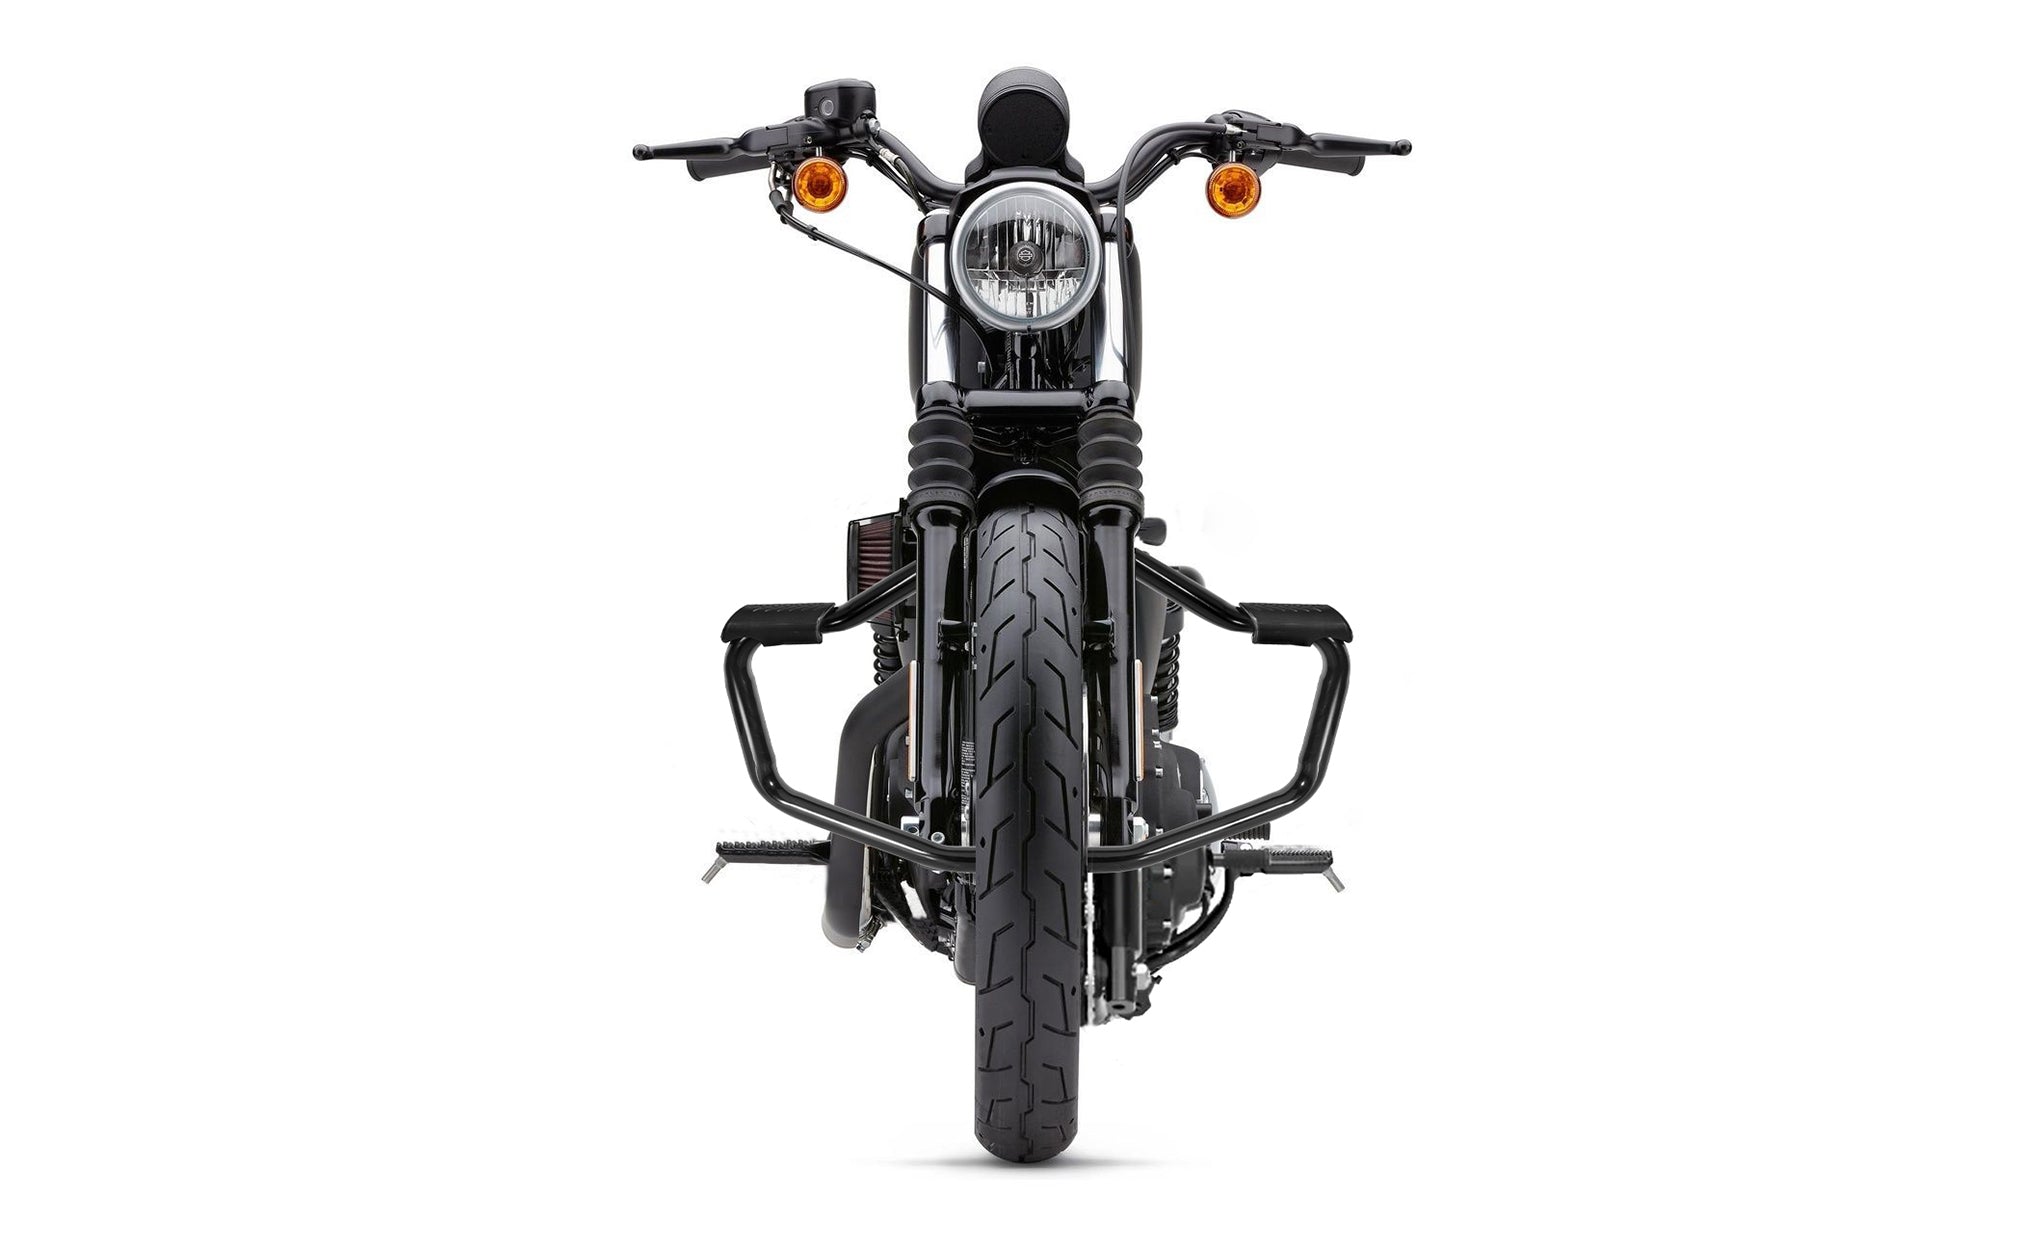 Viking Iron Born Motorcycle Crash Bar/Engine Guard for Harley Sportster Iron 1200 Gloss Black Bag on Bike View @expand